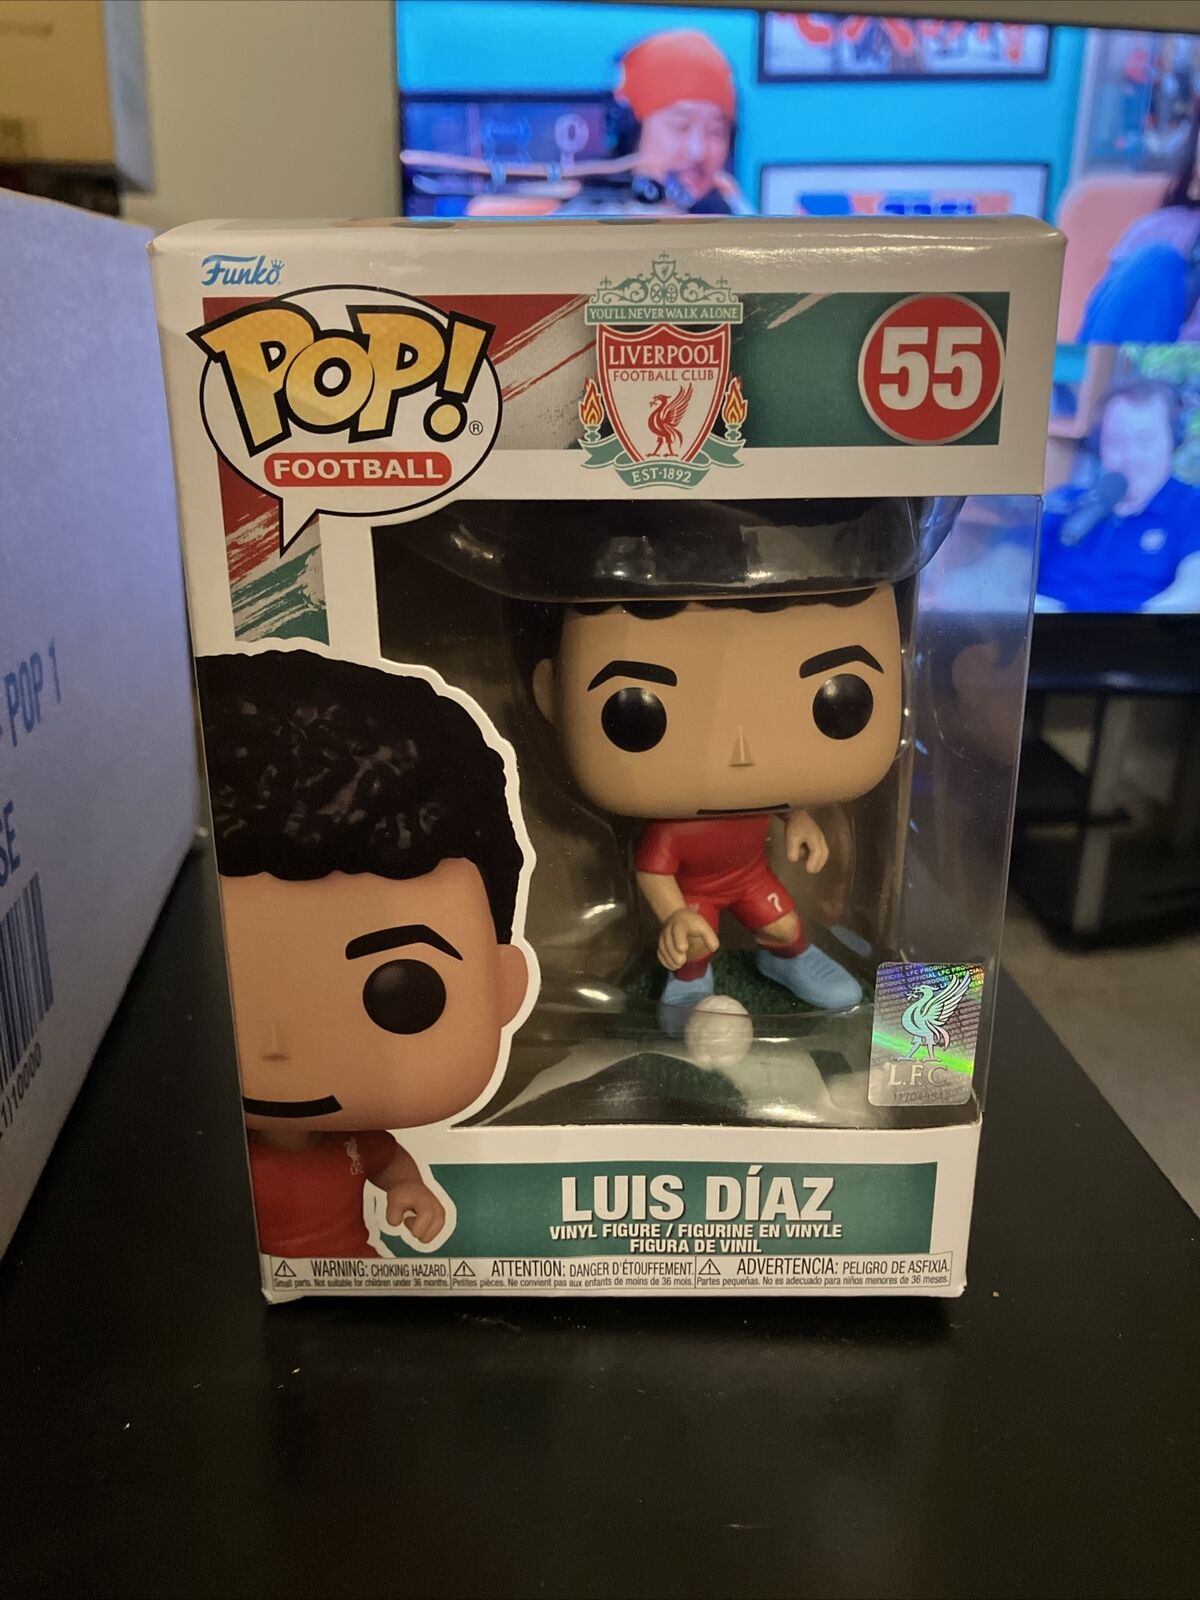 Luis Diaz (Liverpool Football Club) (Soccer) Funko Pop Box Damage